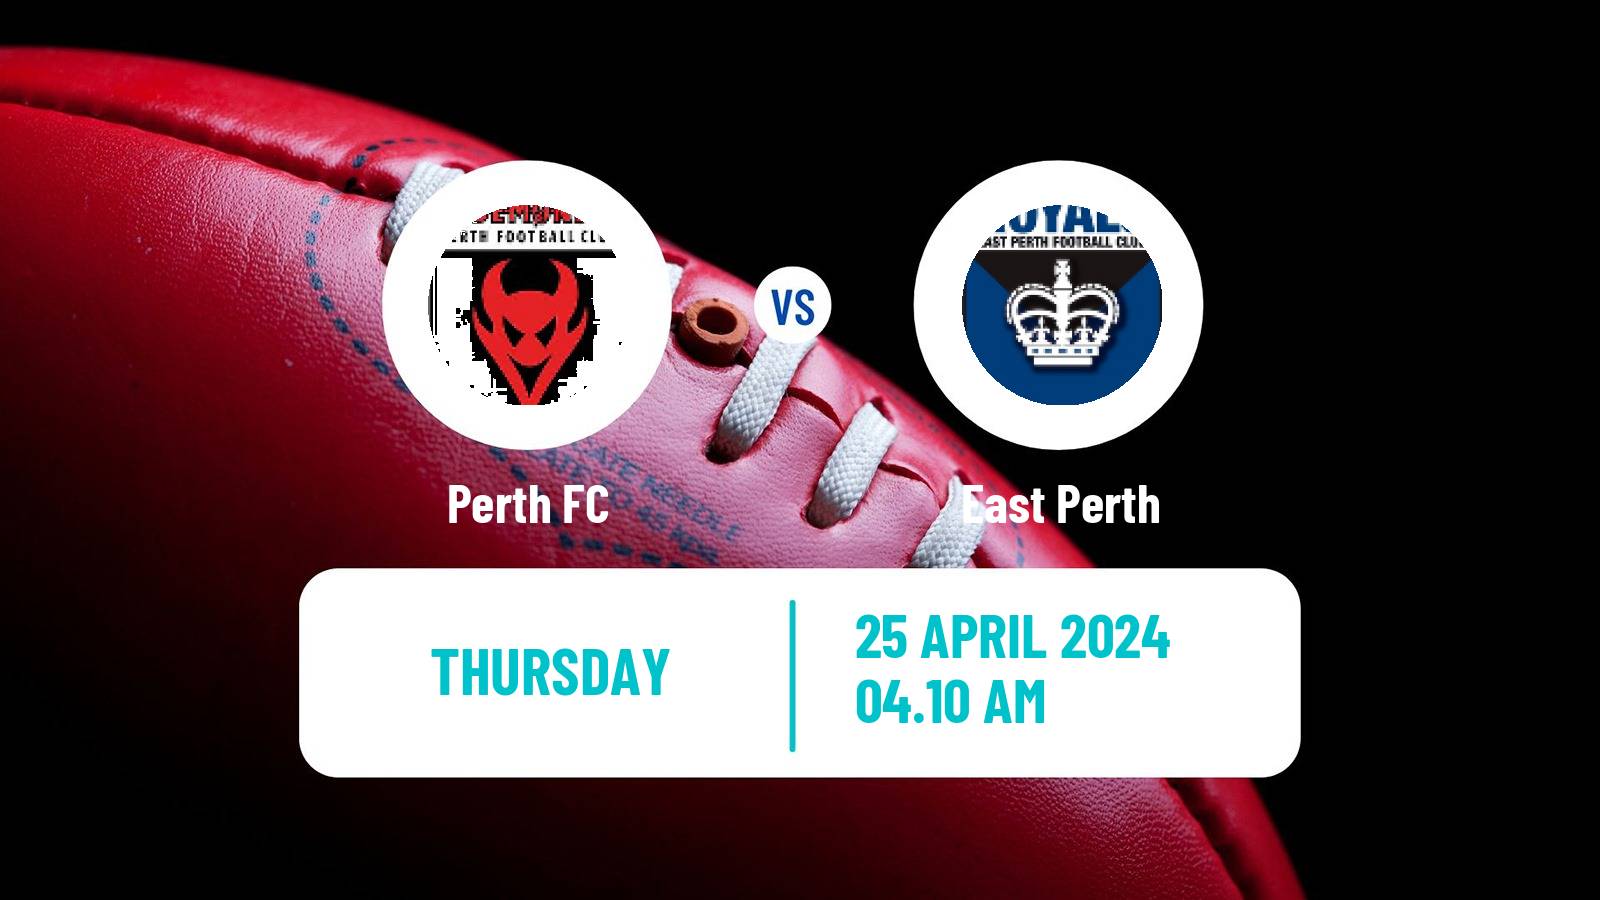 Aussie rules WAFL Perth - East Perth